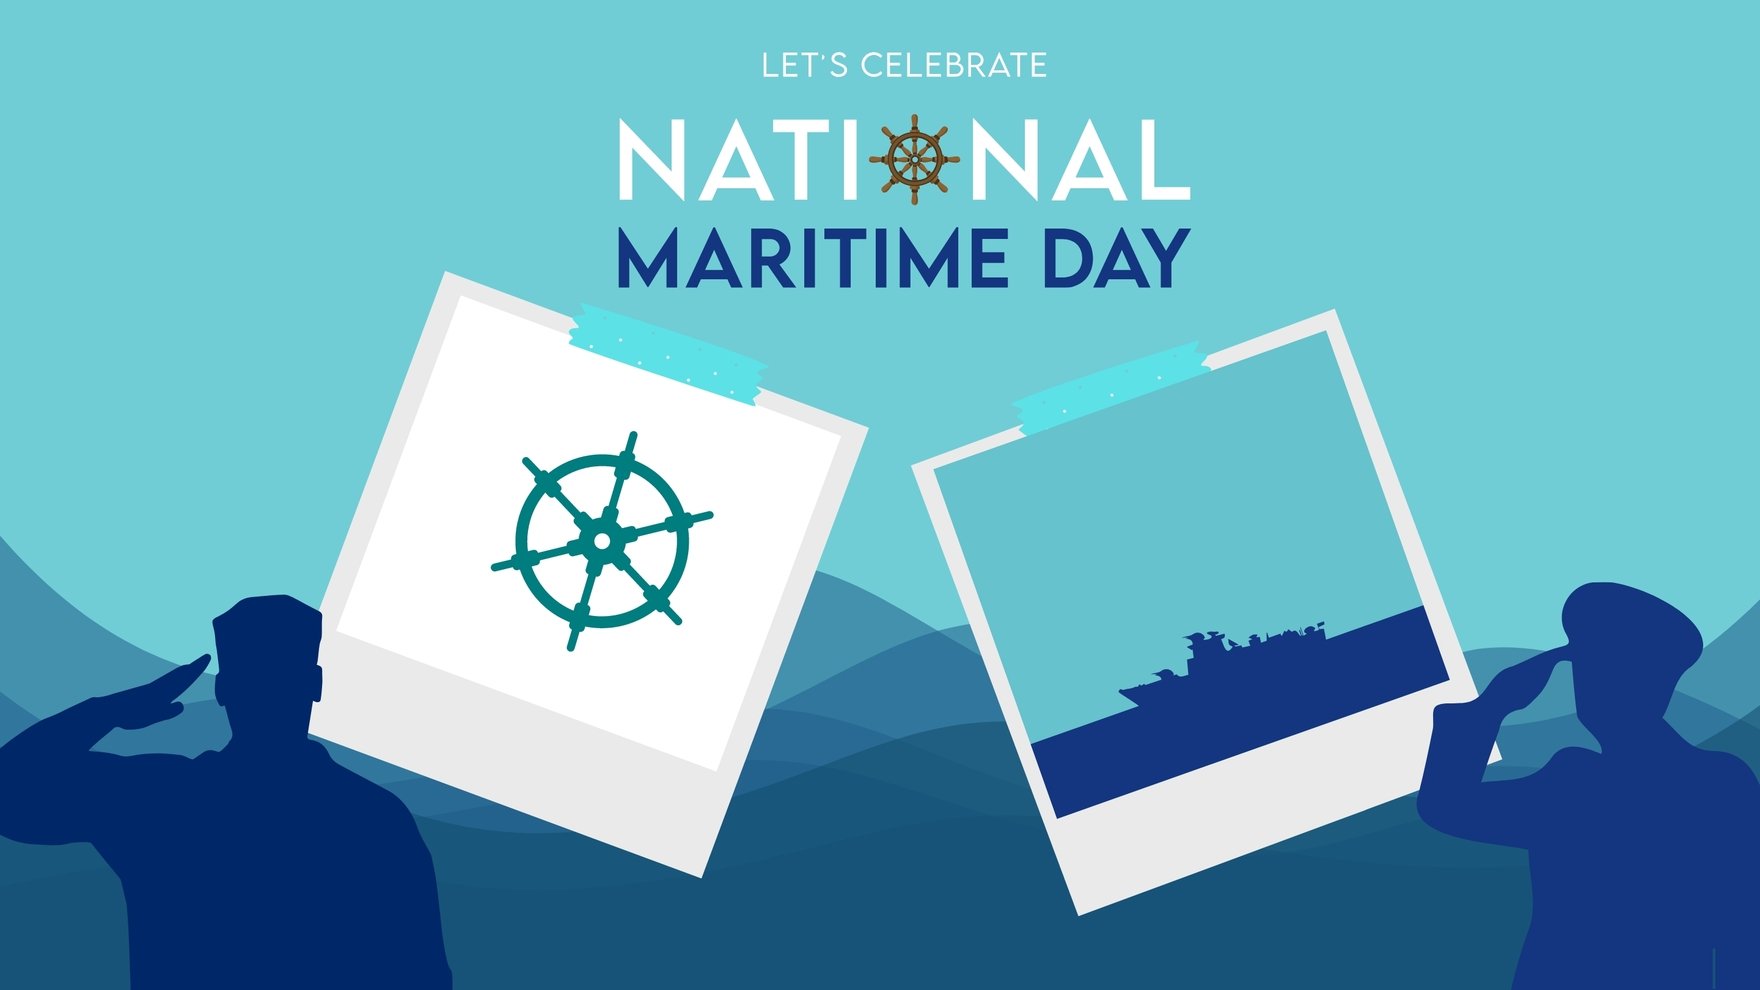 Free National Maritime Day Image Background